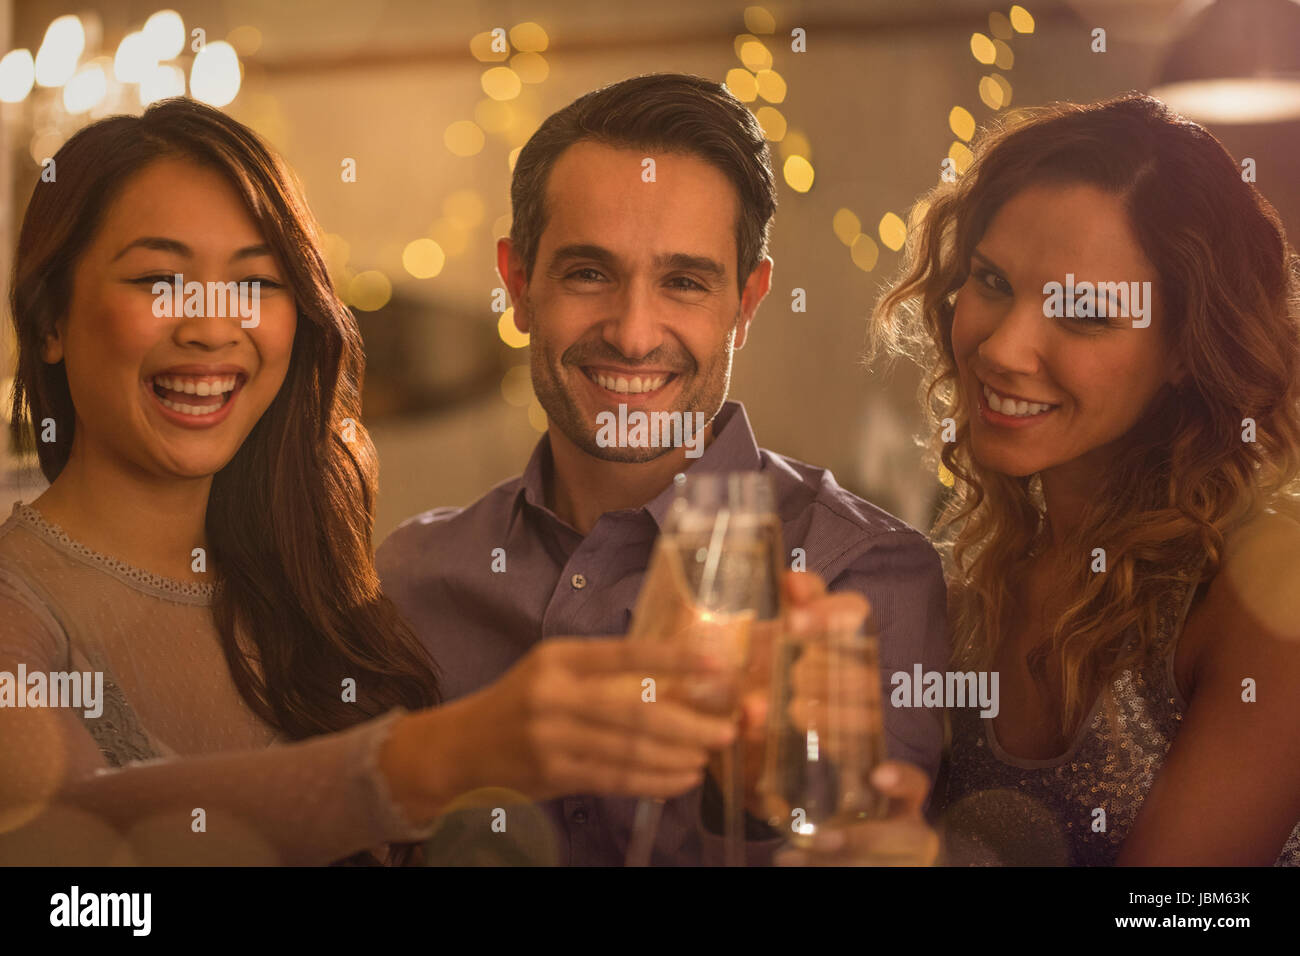 Portrait smiling friends toasting wine glasses Stock Photo